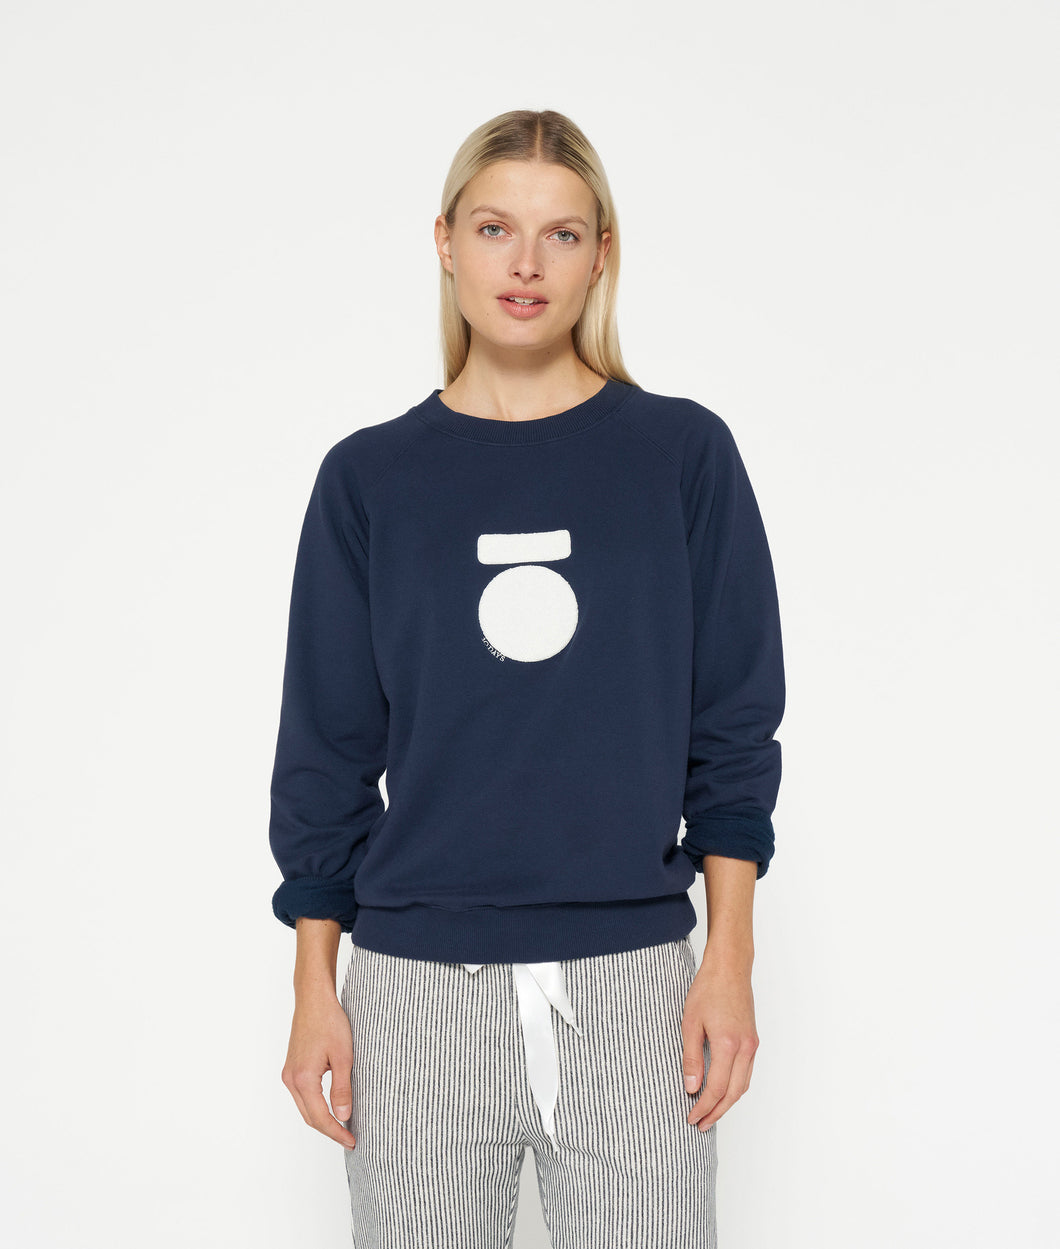 icon sweater 20-807-4201 1226 night sky